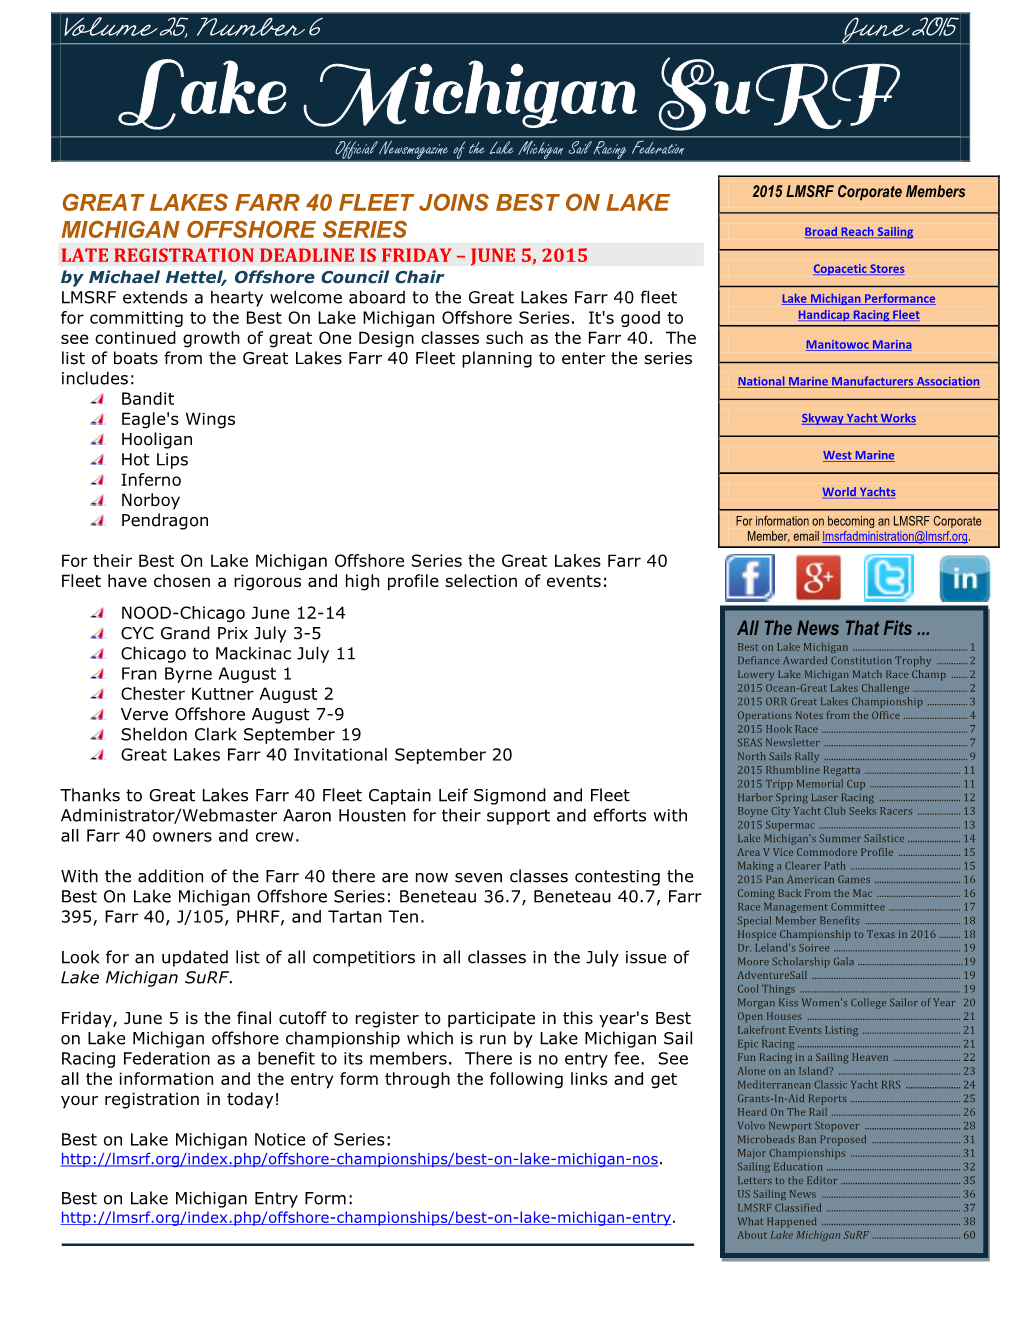 Lake Michigan Surf Newsletter the E-Publication of the Lake Michigan Sail Racing Federation